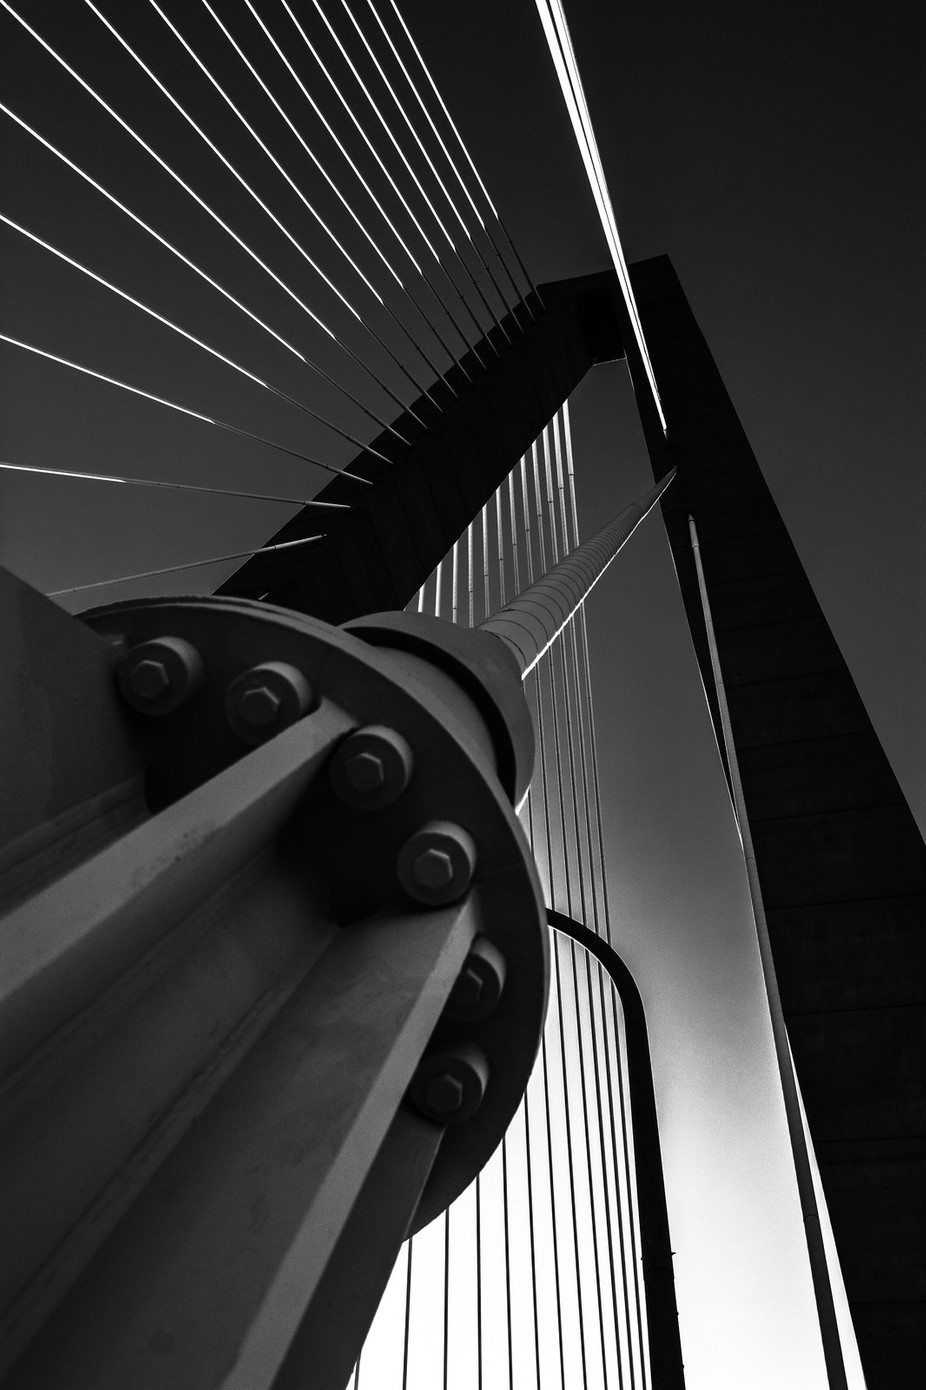 Arthur Ravenel Bridge Series in Black and White by Photogirl118 - Geometry in Black and White Photo Contest